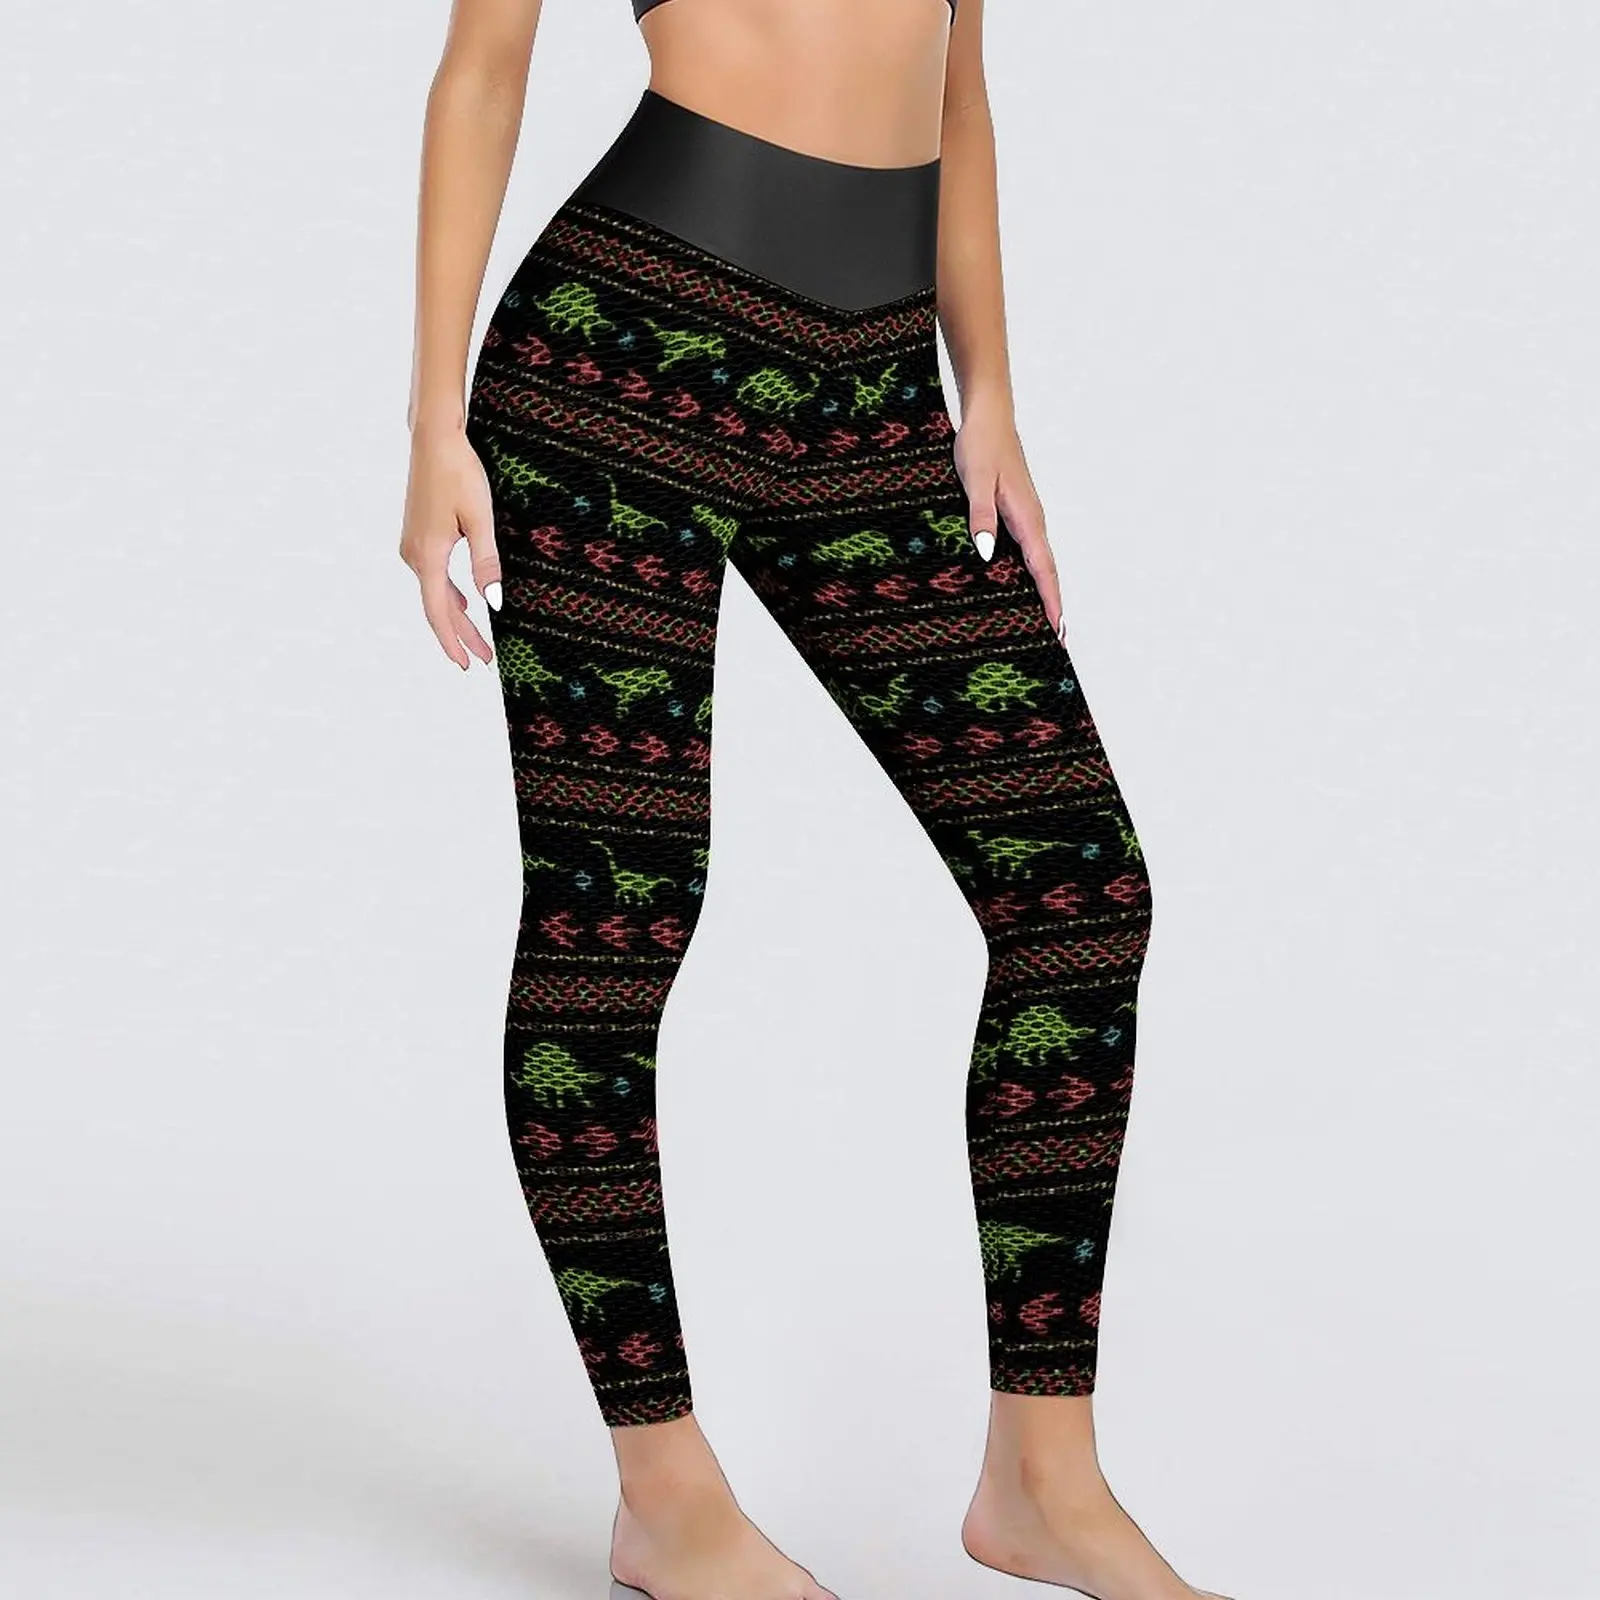 Christmas Dinosaurs Leggings Knit Embroidered Print Fitness Yoga Pants Women Push Up Leggins Sexy Stretchy Design Sport Legging